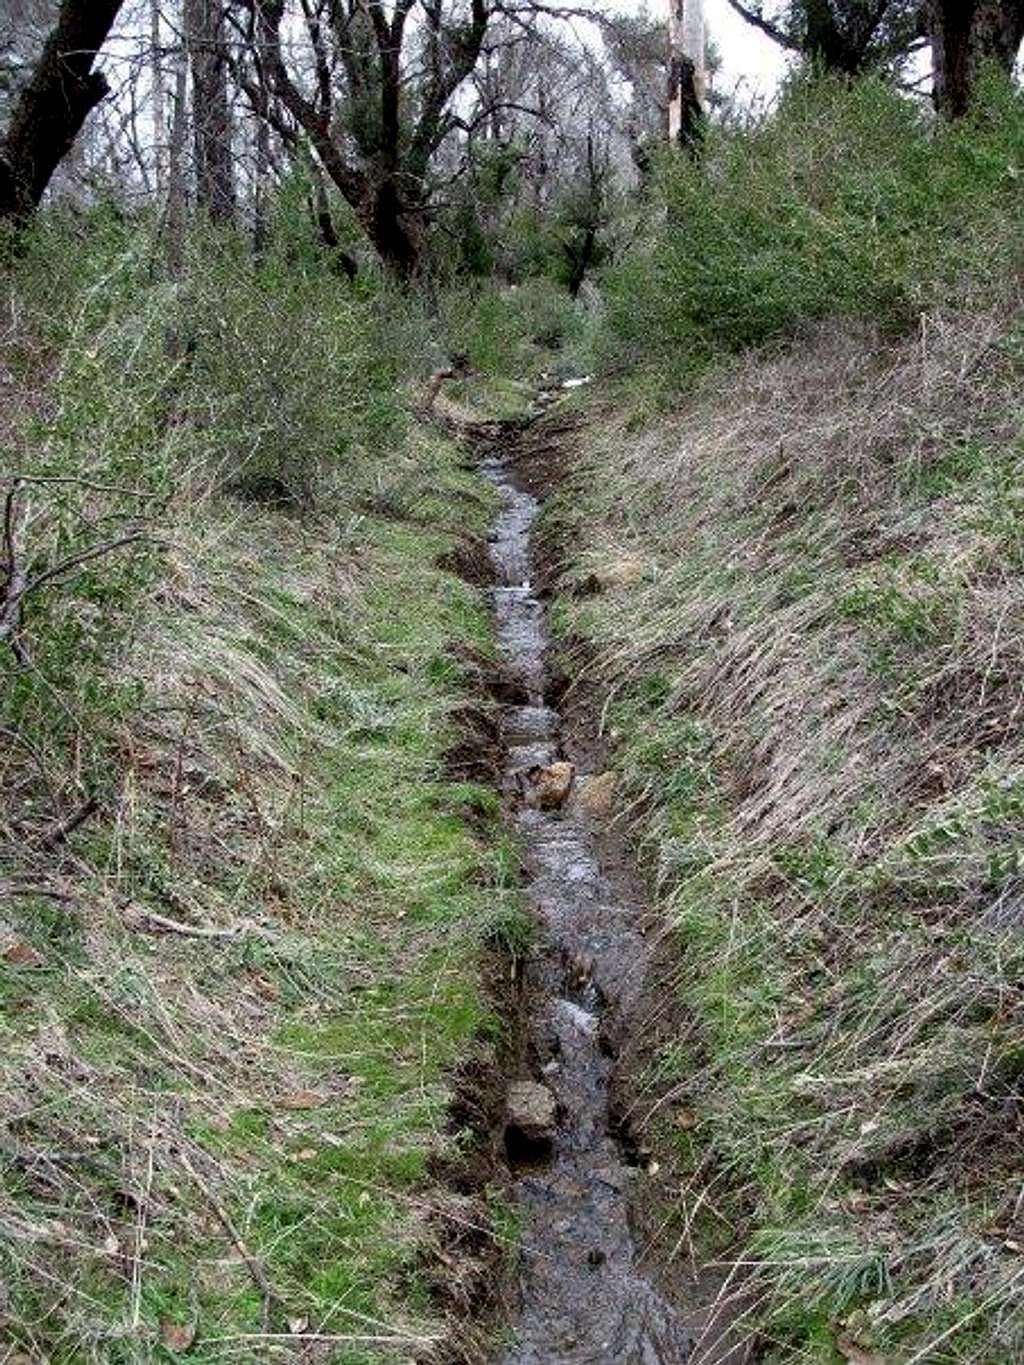 Trail is a stream